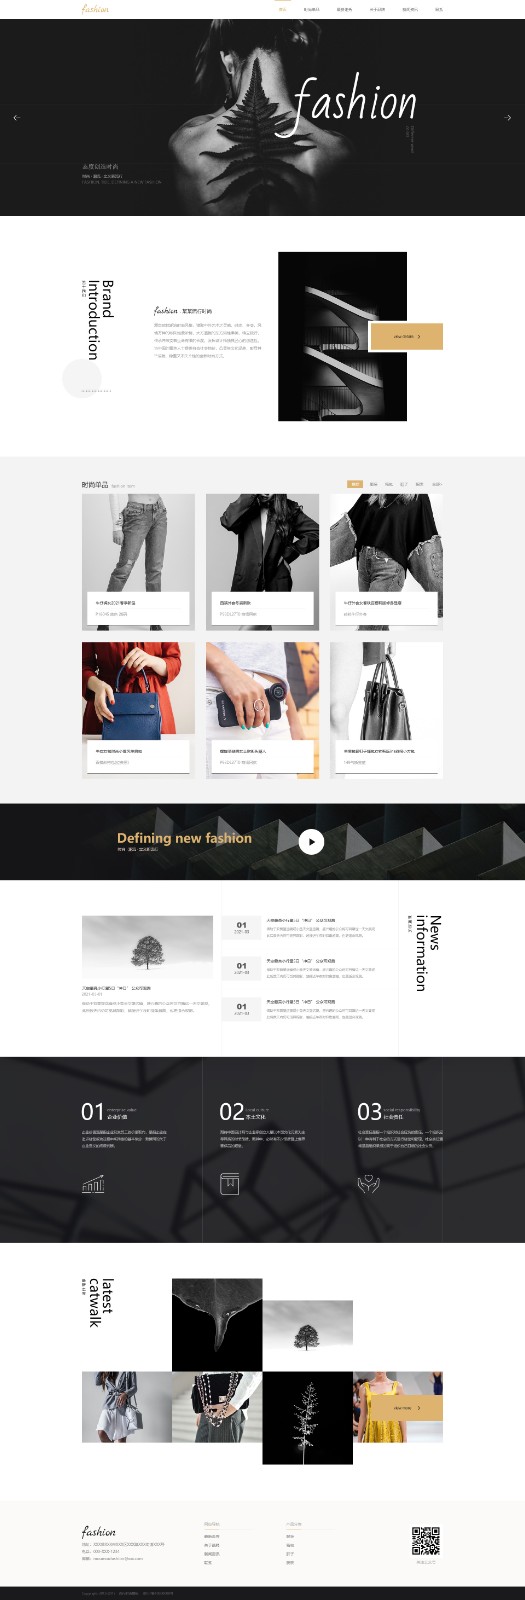 企业网站精美模板-fashion-288